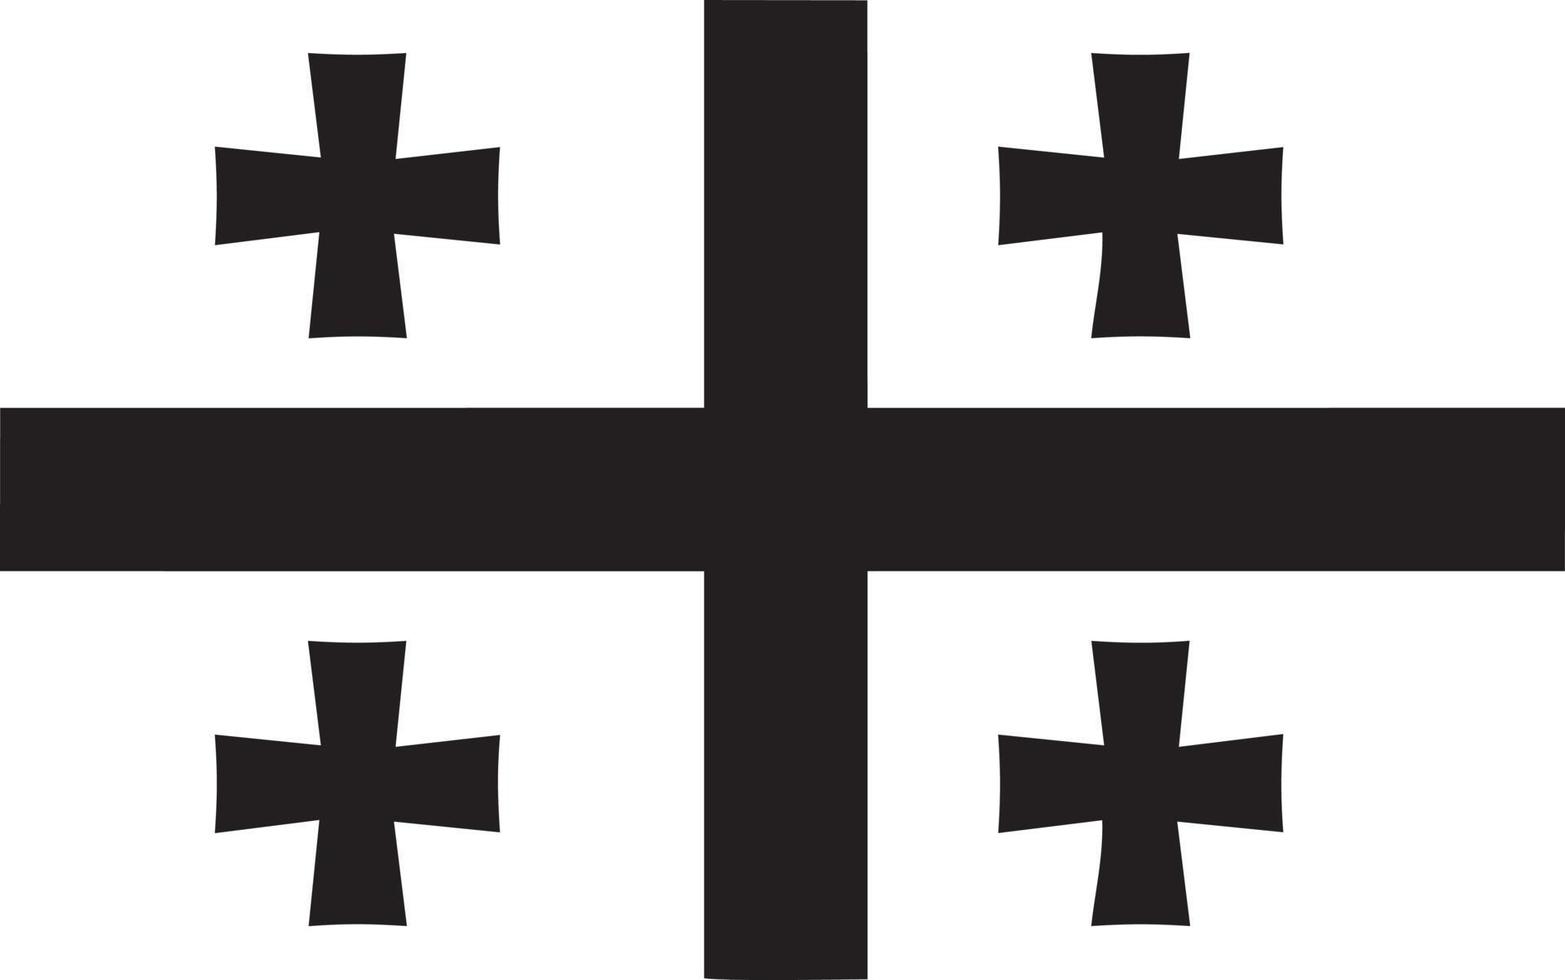 Flag icon symbol vector image. Illustration of the waving flag location design image. EPS 10.